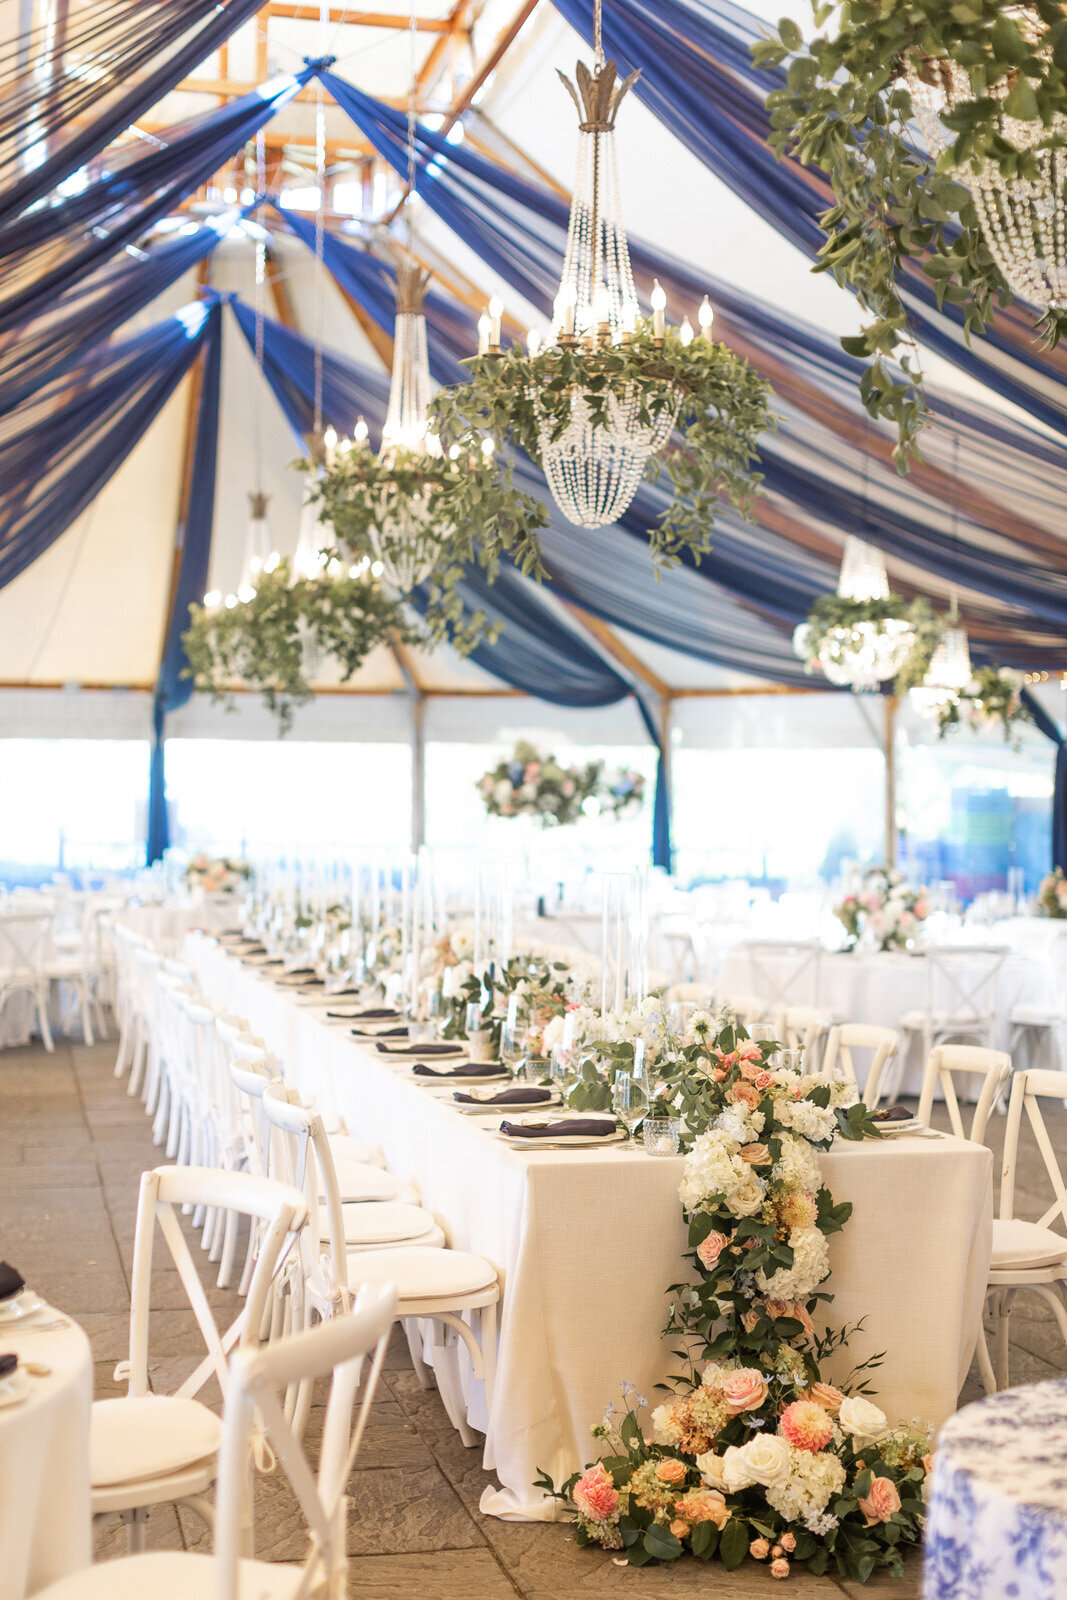 Kate-Murtaugh-Events-Castle-Hill-Inn-wedding-tent-floral-garland-drapery